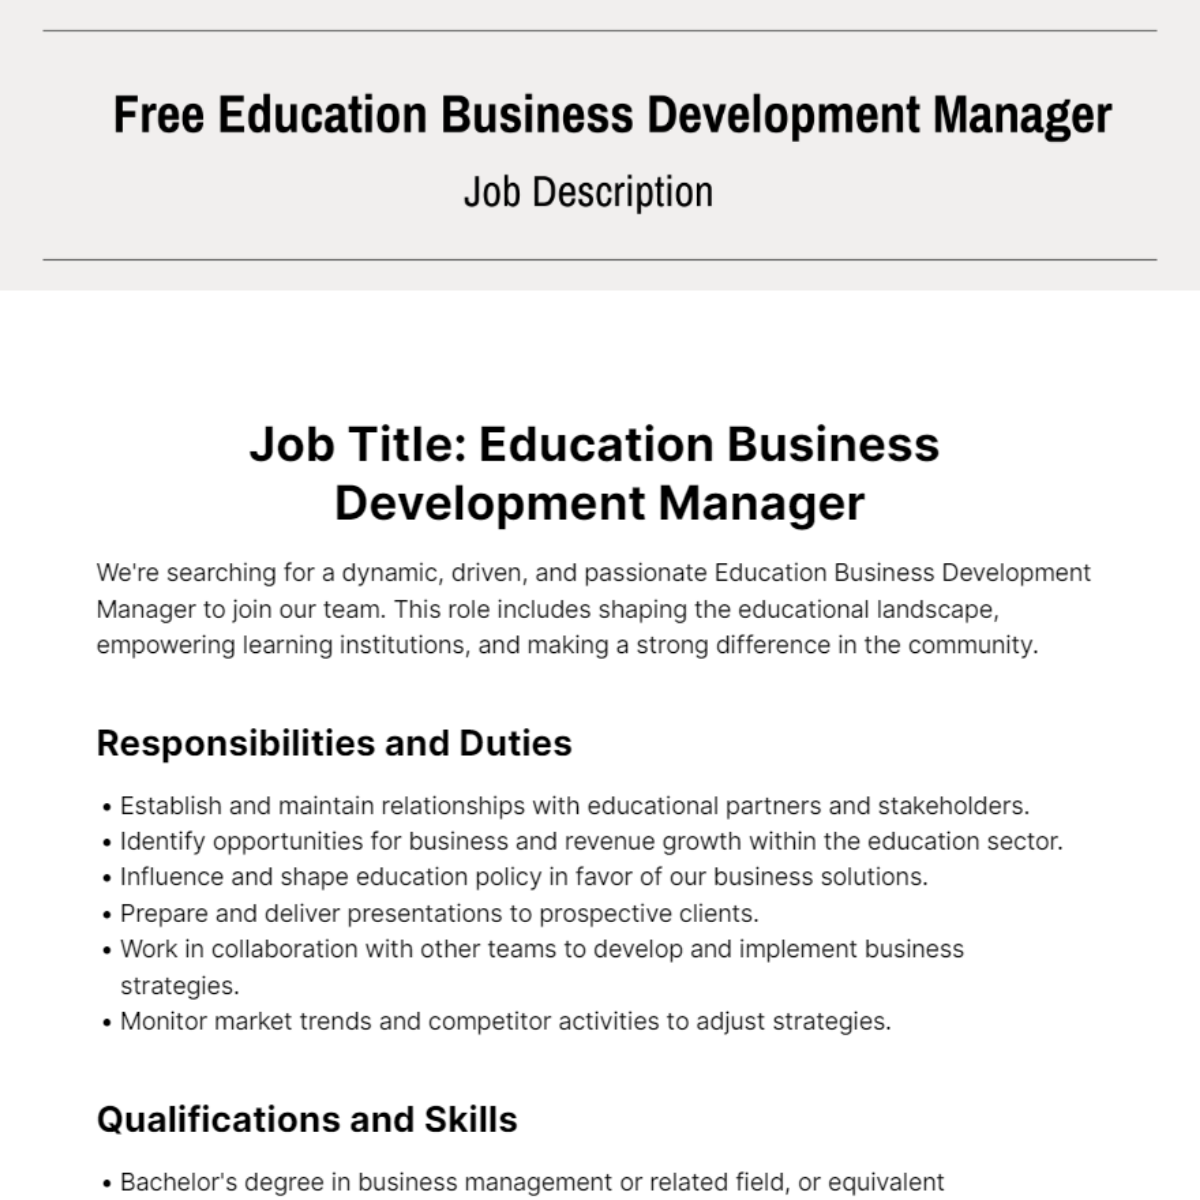 Free Education Business Development Manager Job Description Template